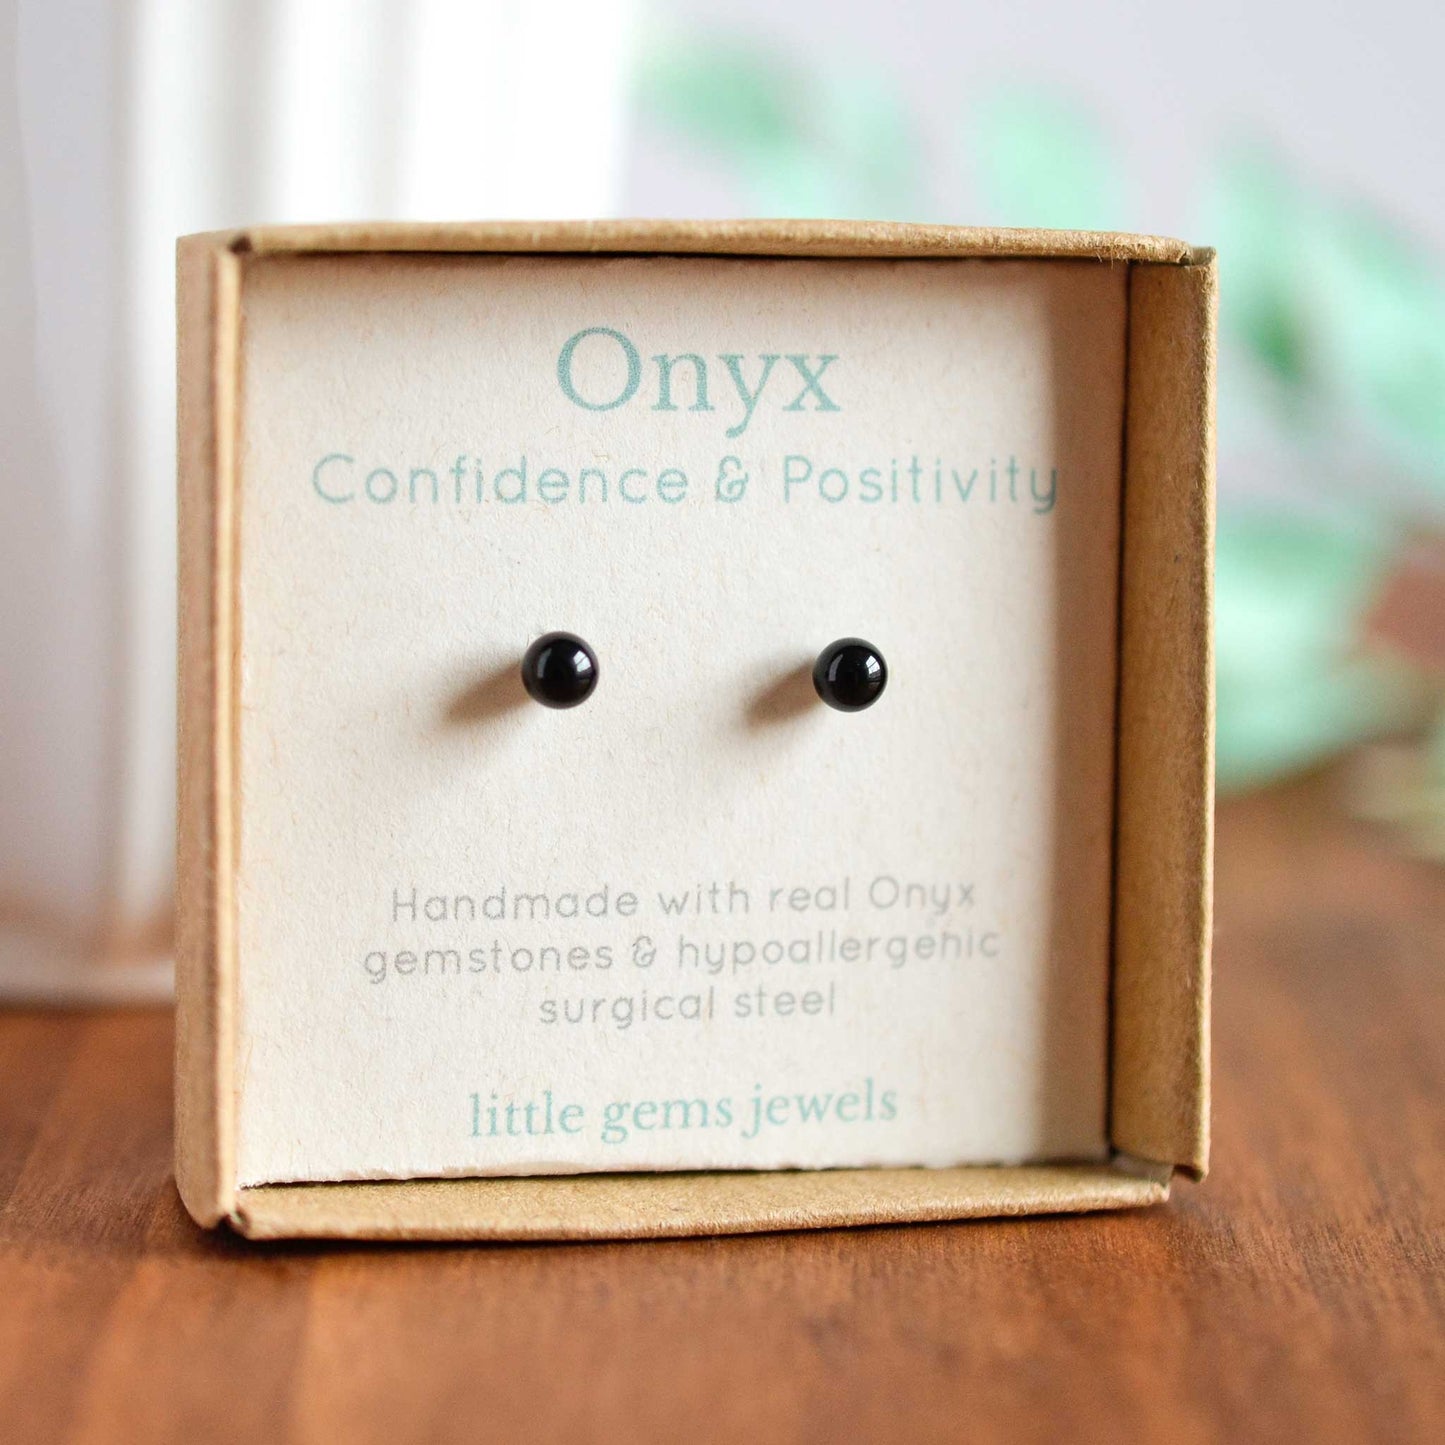 Tiny black Onyx stud earrings in eco friendly gift box